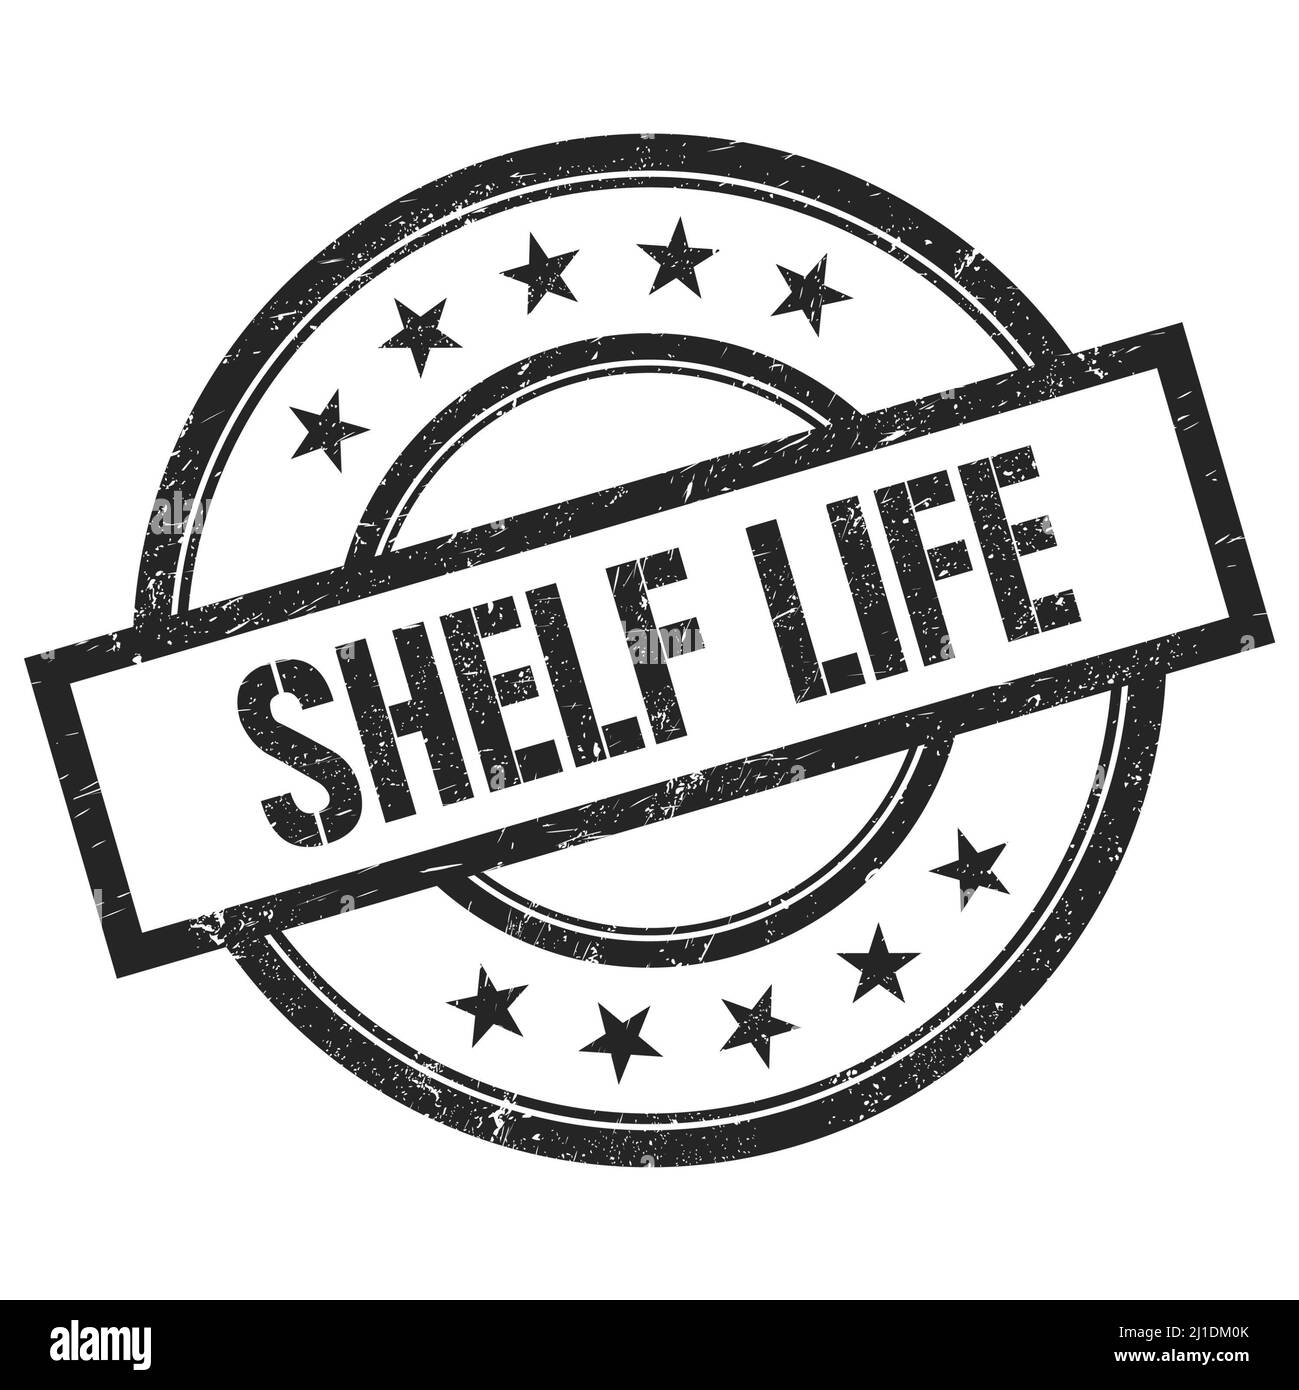 SHELF LIFE text written on black round vintage rubber stamp. Stock Photo